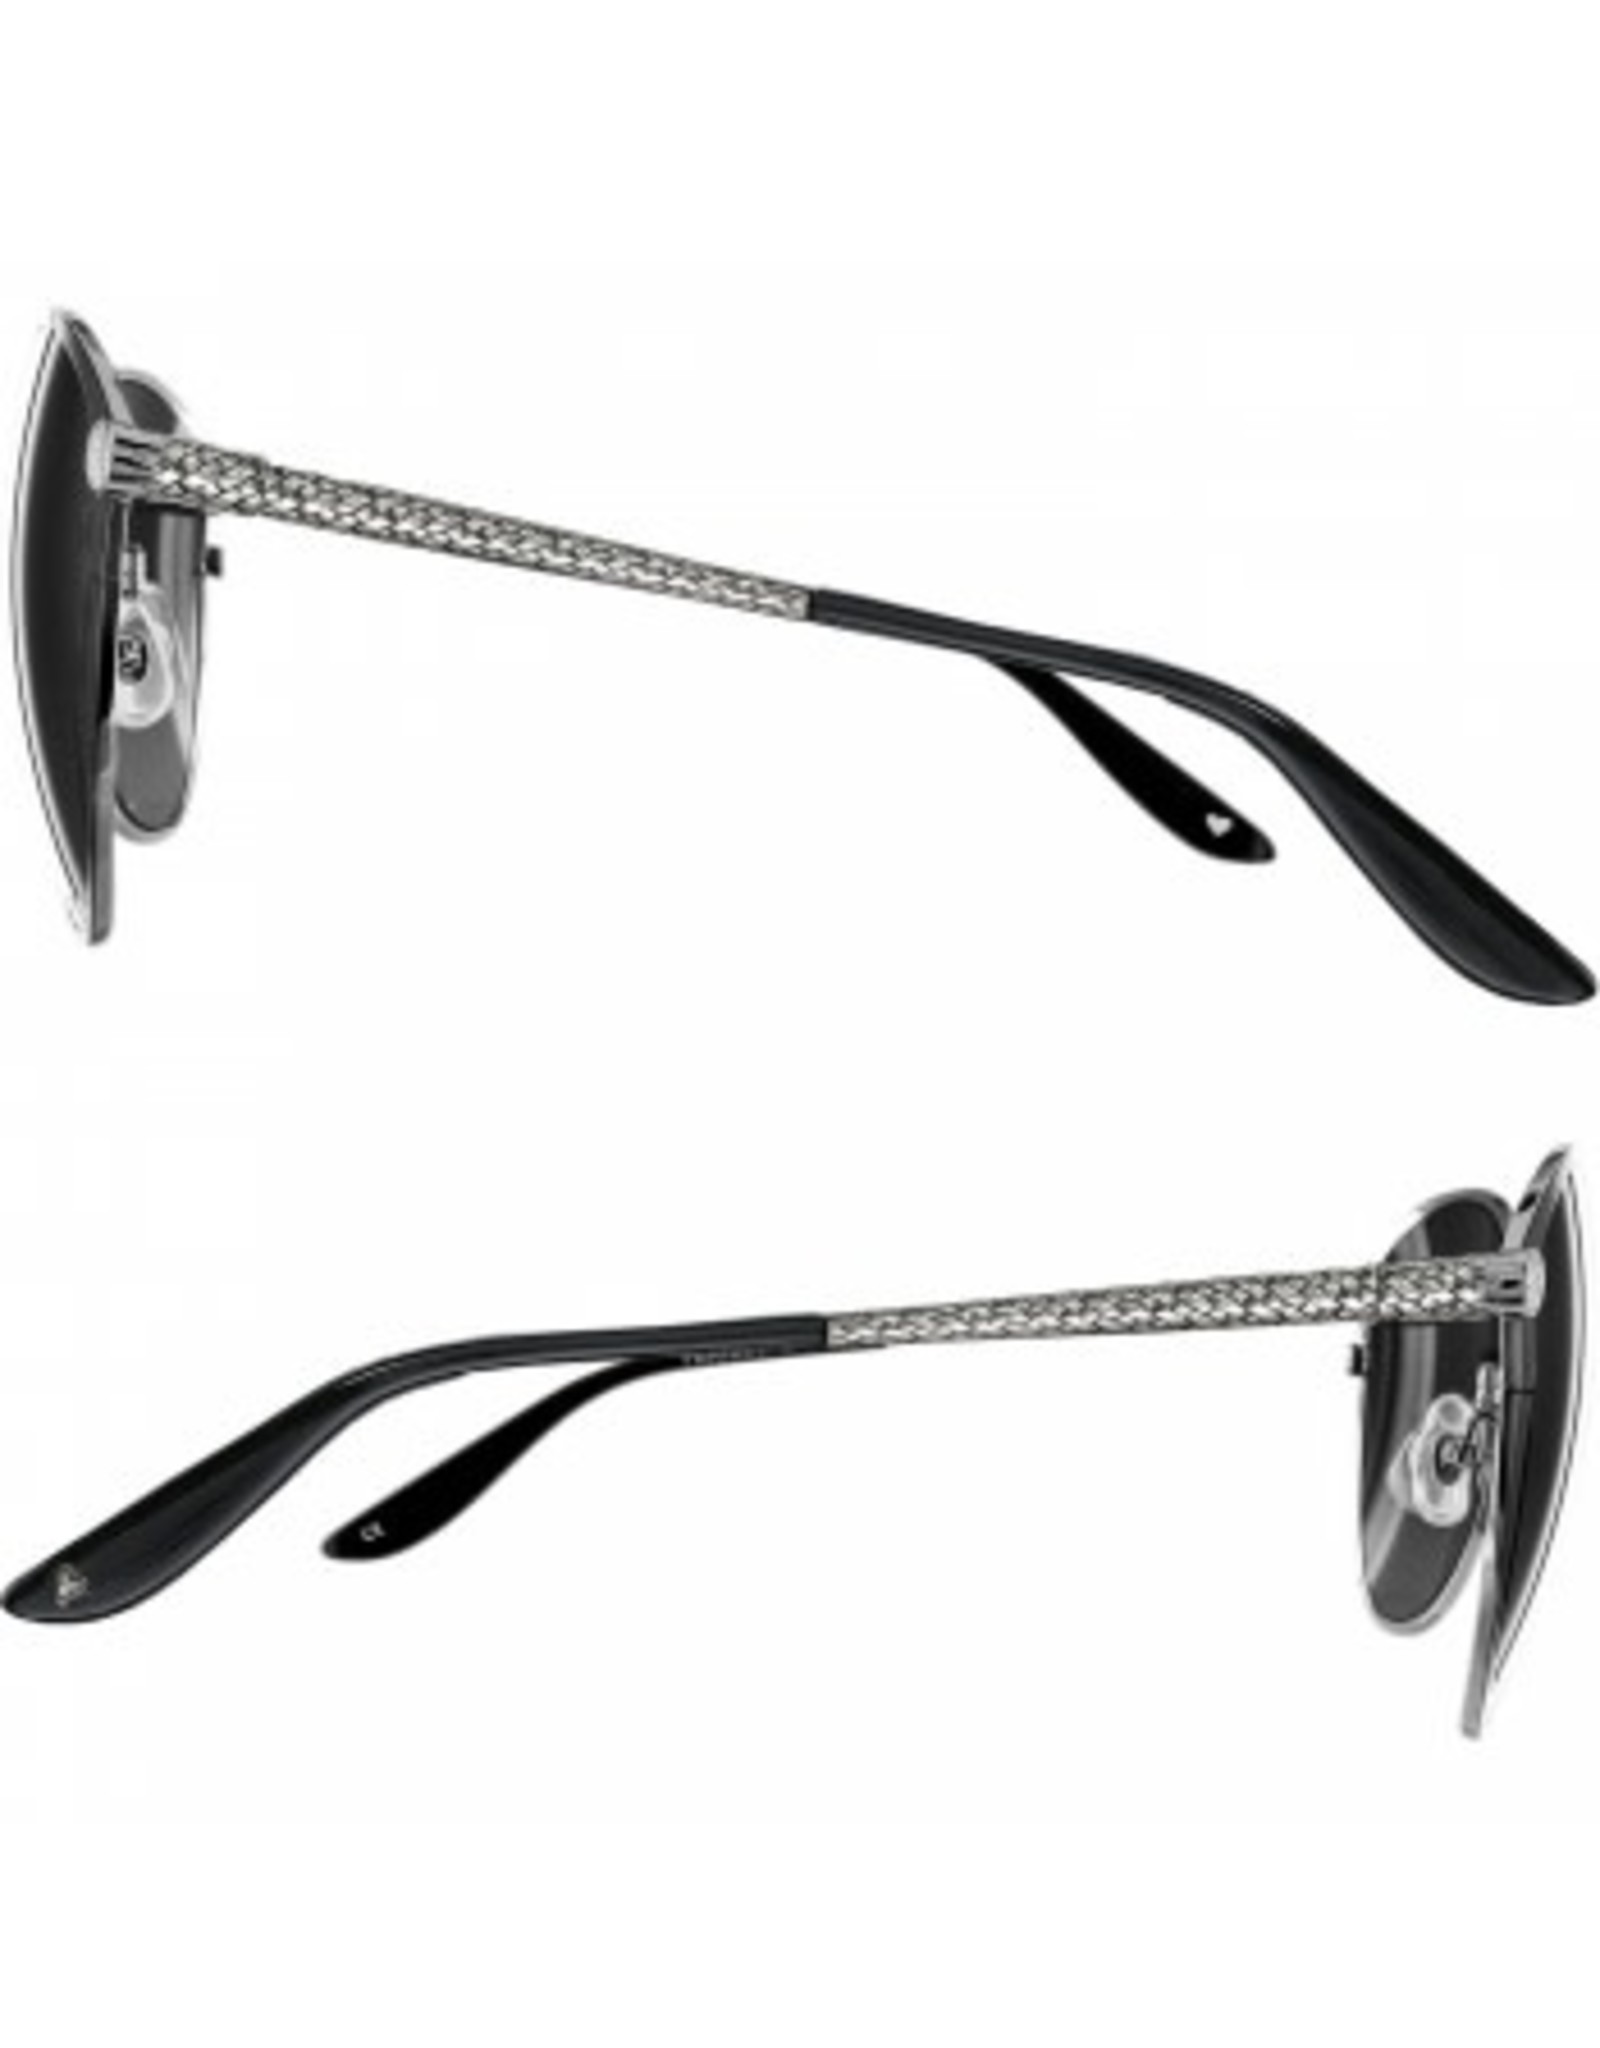 Brighton Ferrara Gatta Sunglasses